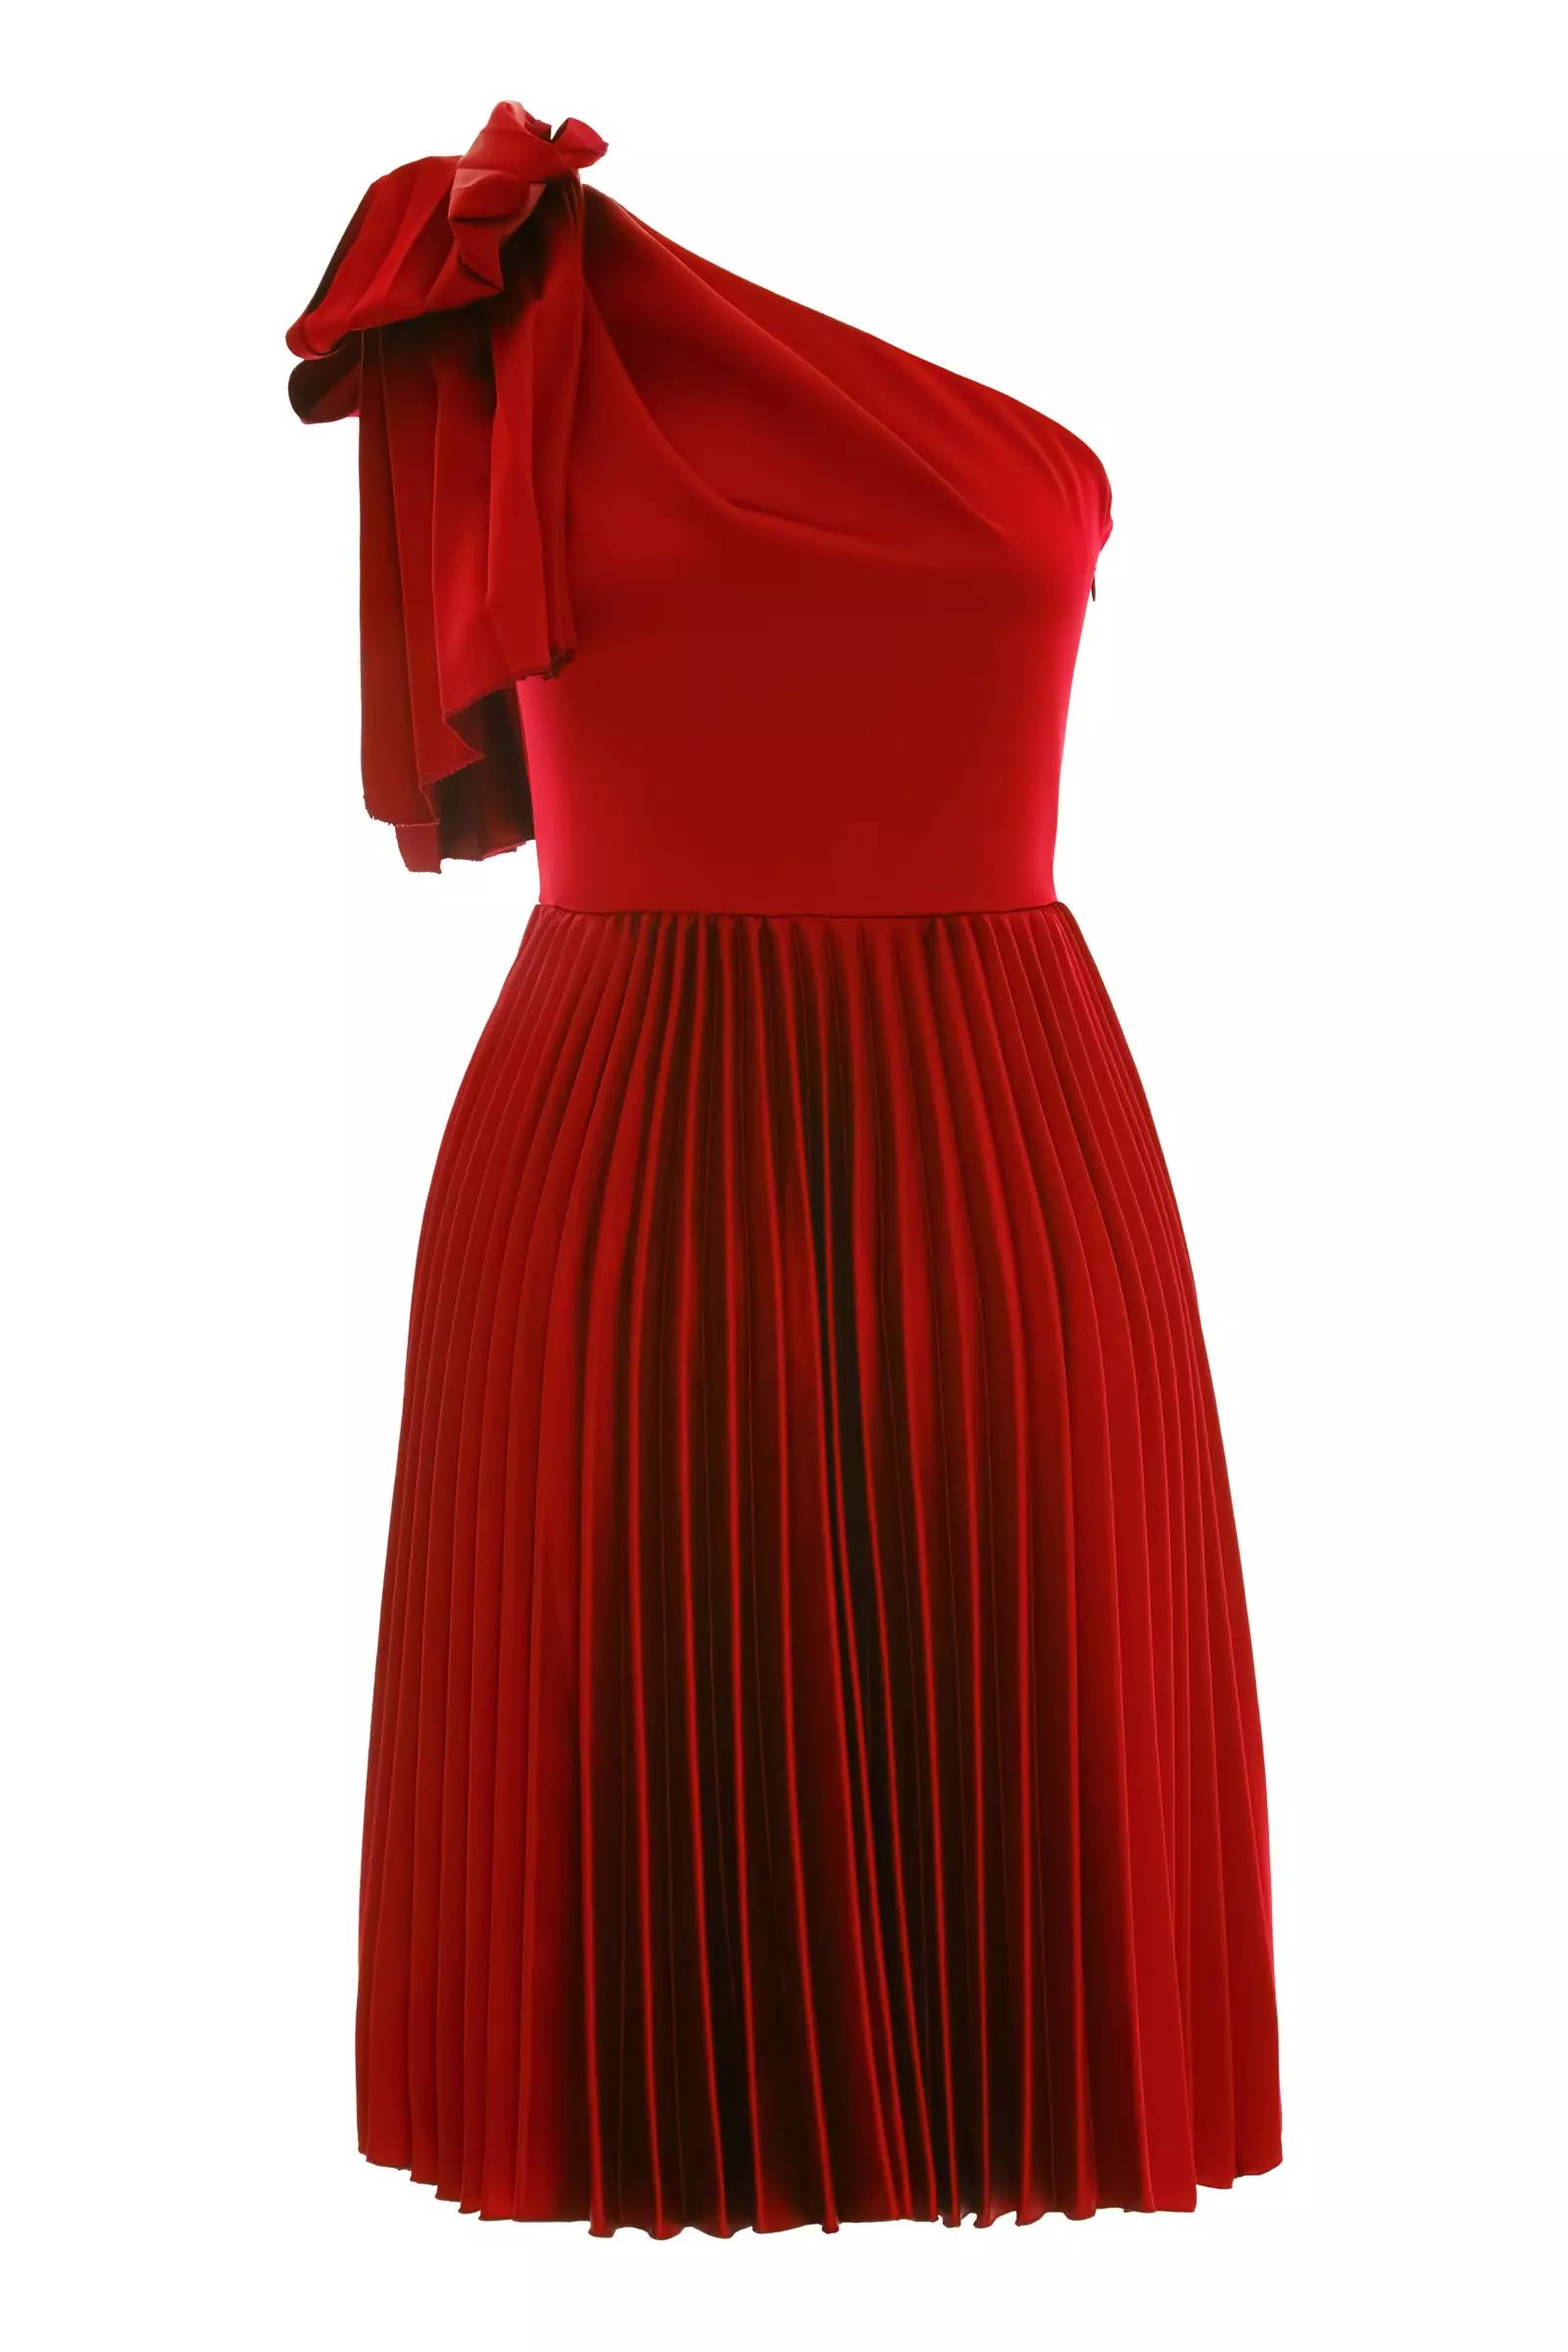 Red satin one arm mini dress